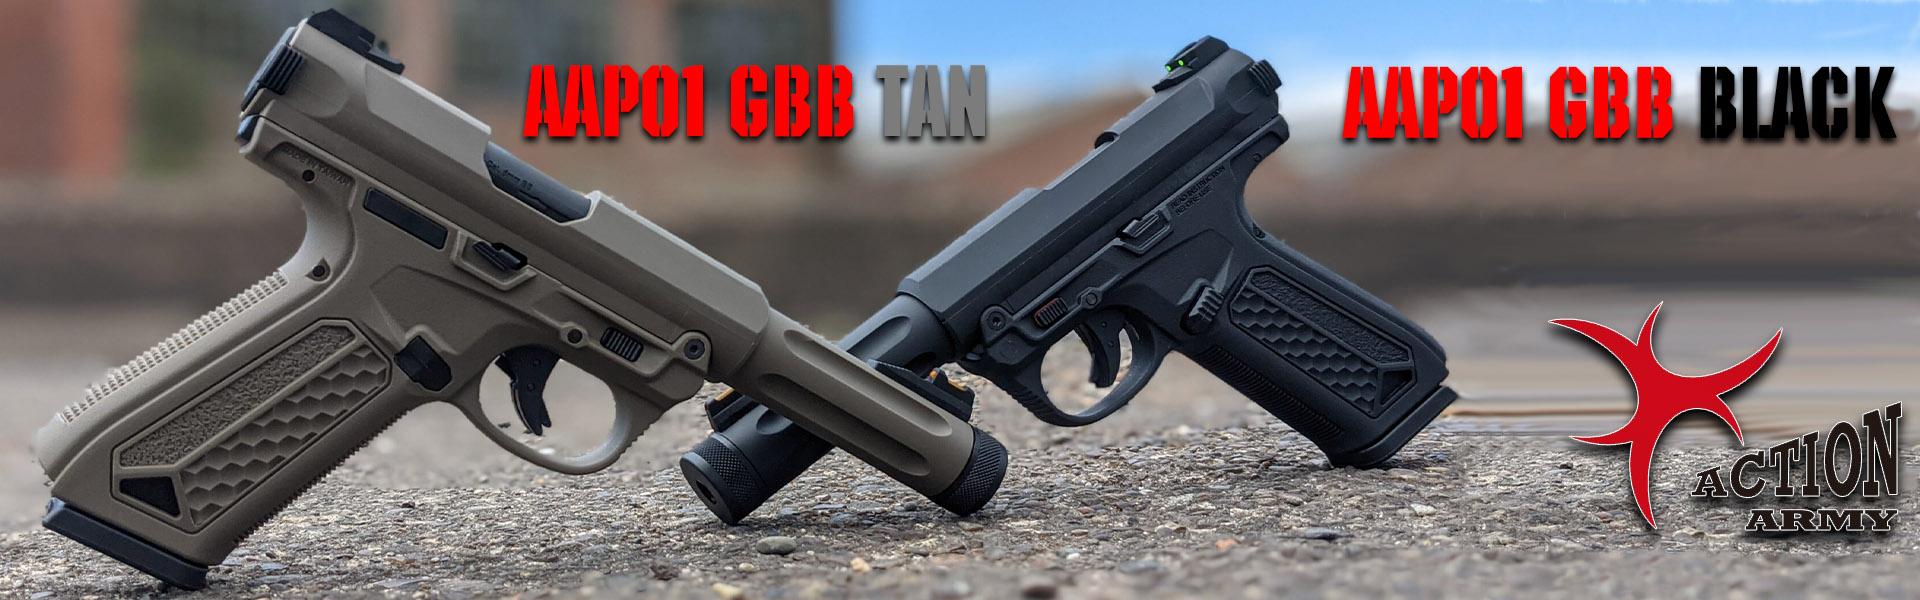 Pistolet AAP01 assassin GBB Semi/Full Auto